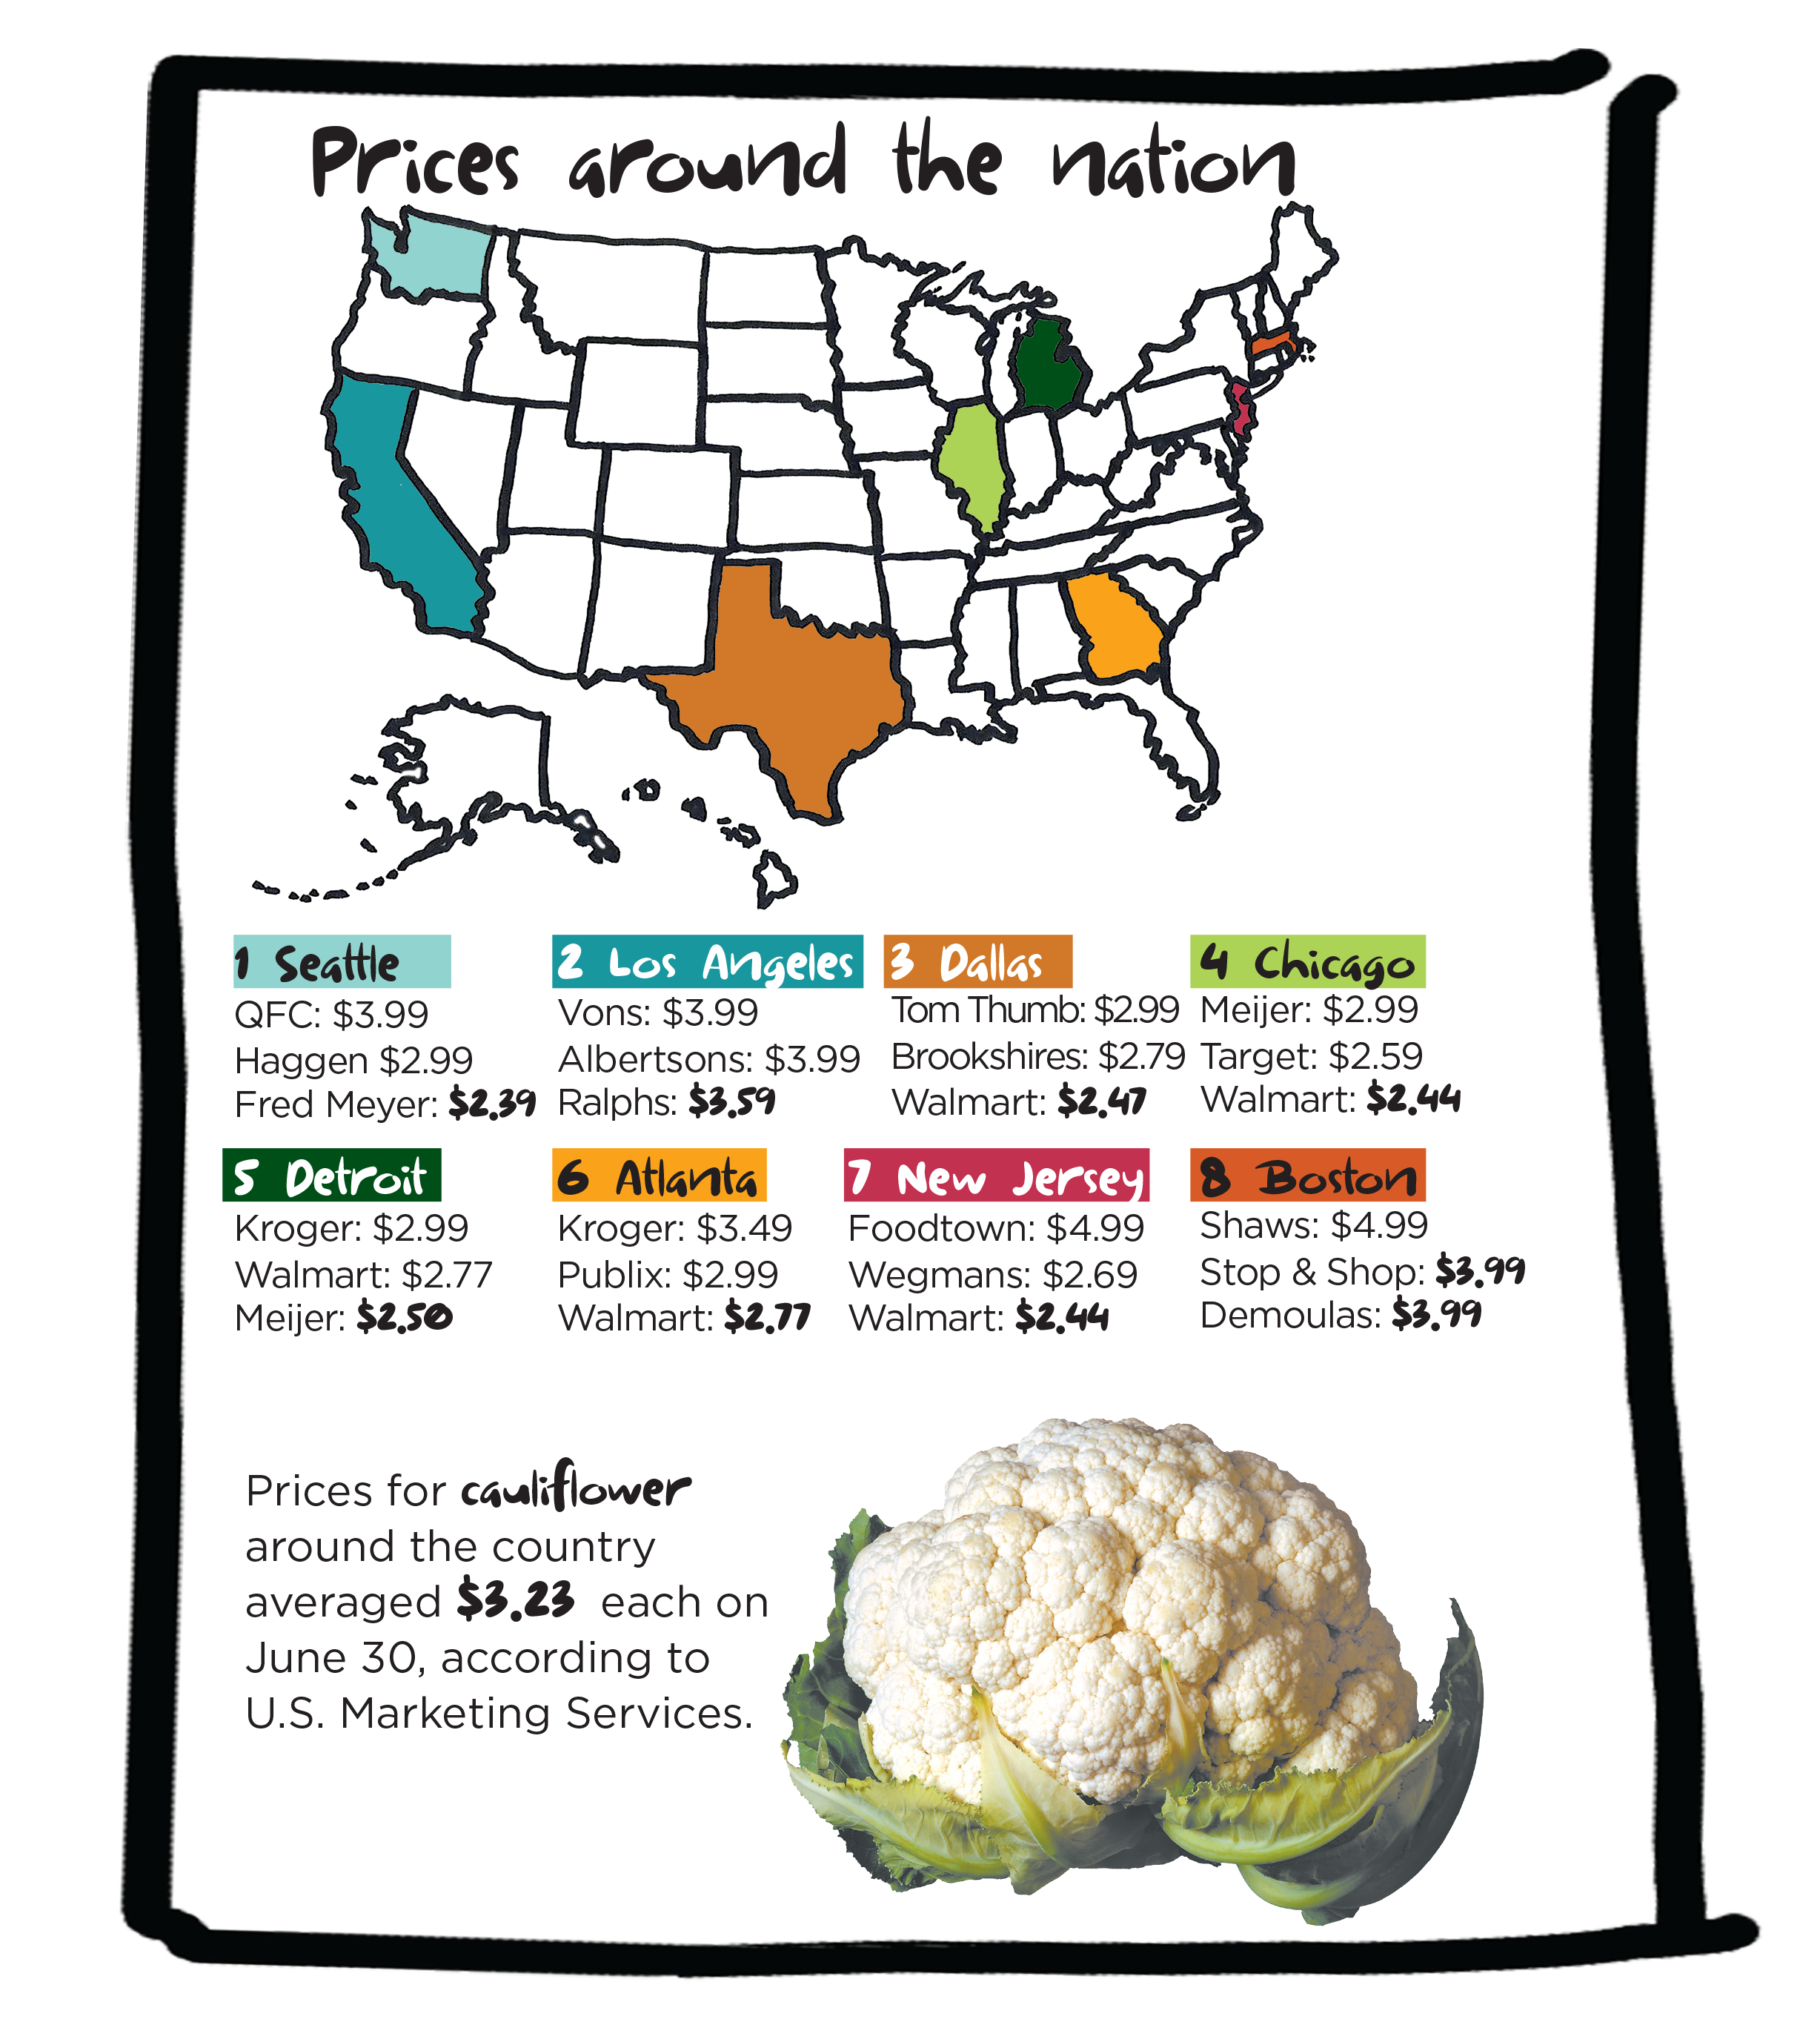 Prices around the nation for cauliflower